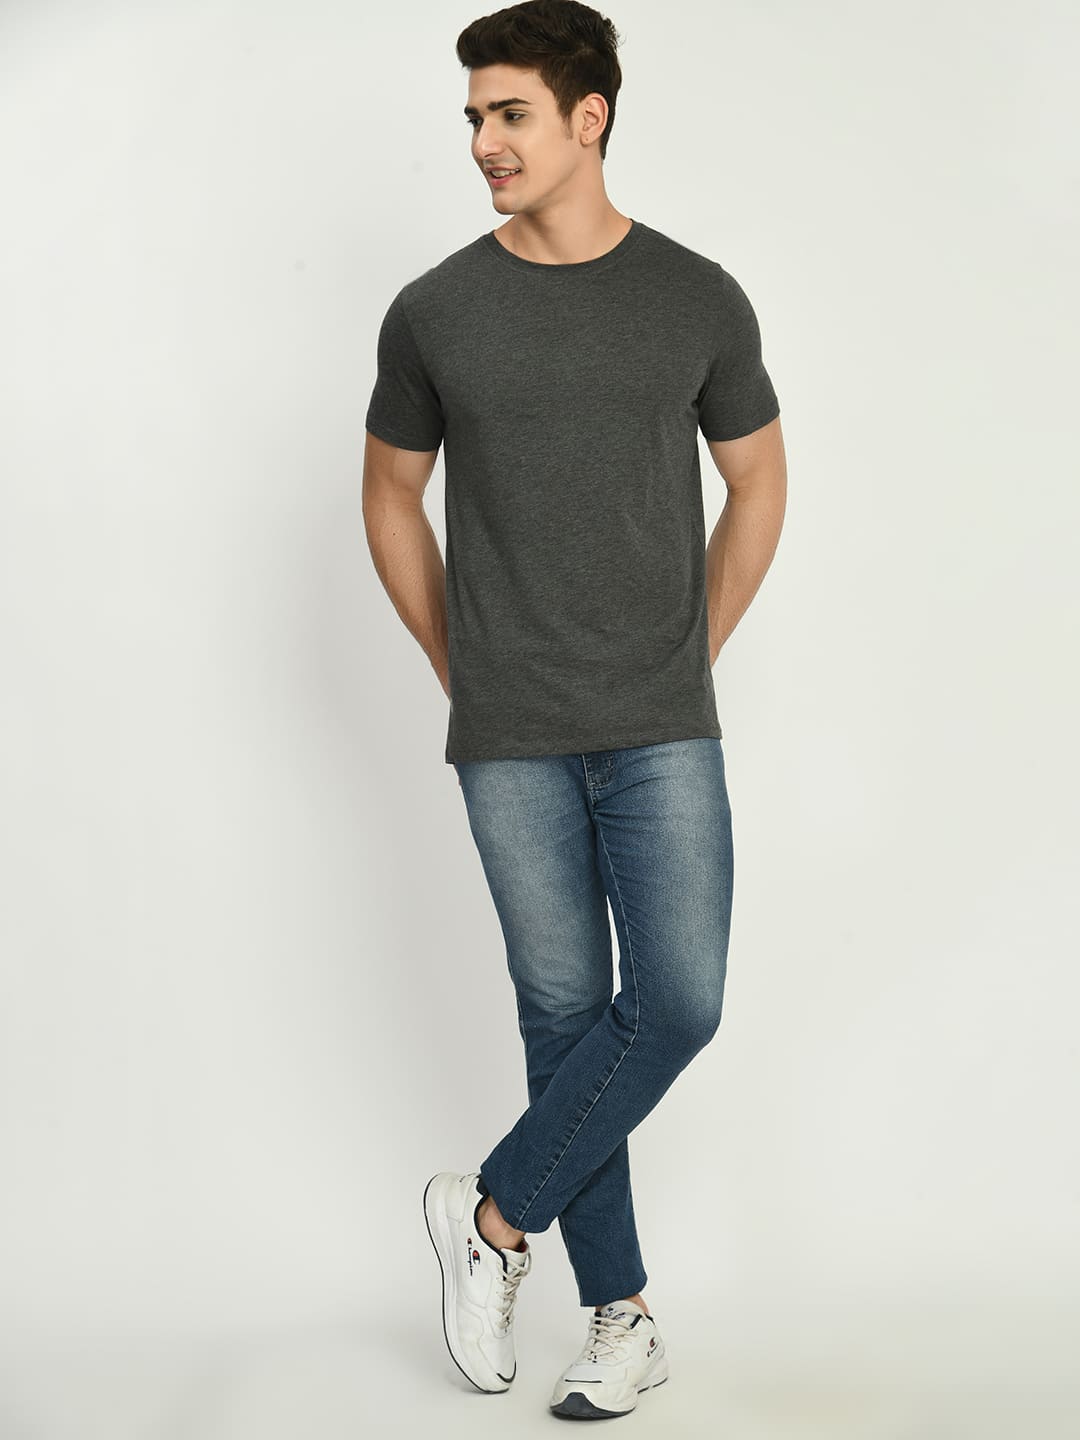 Men's Gray Black Solid Round Neck T-Shirt